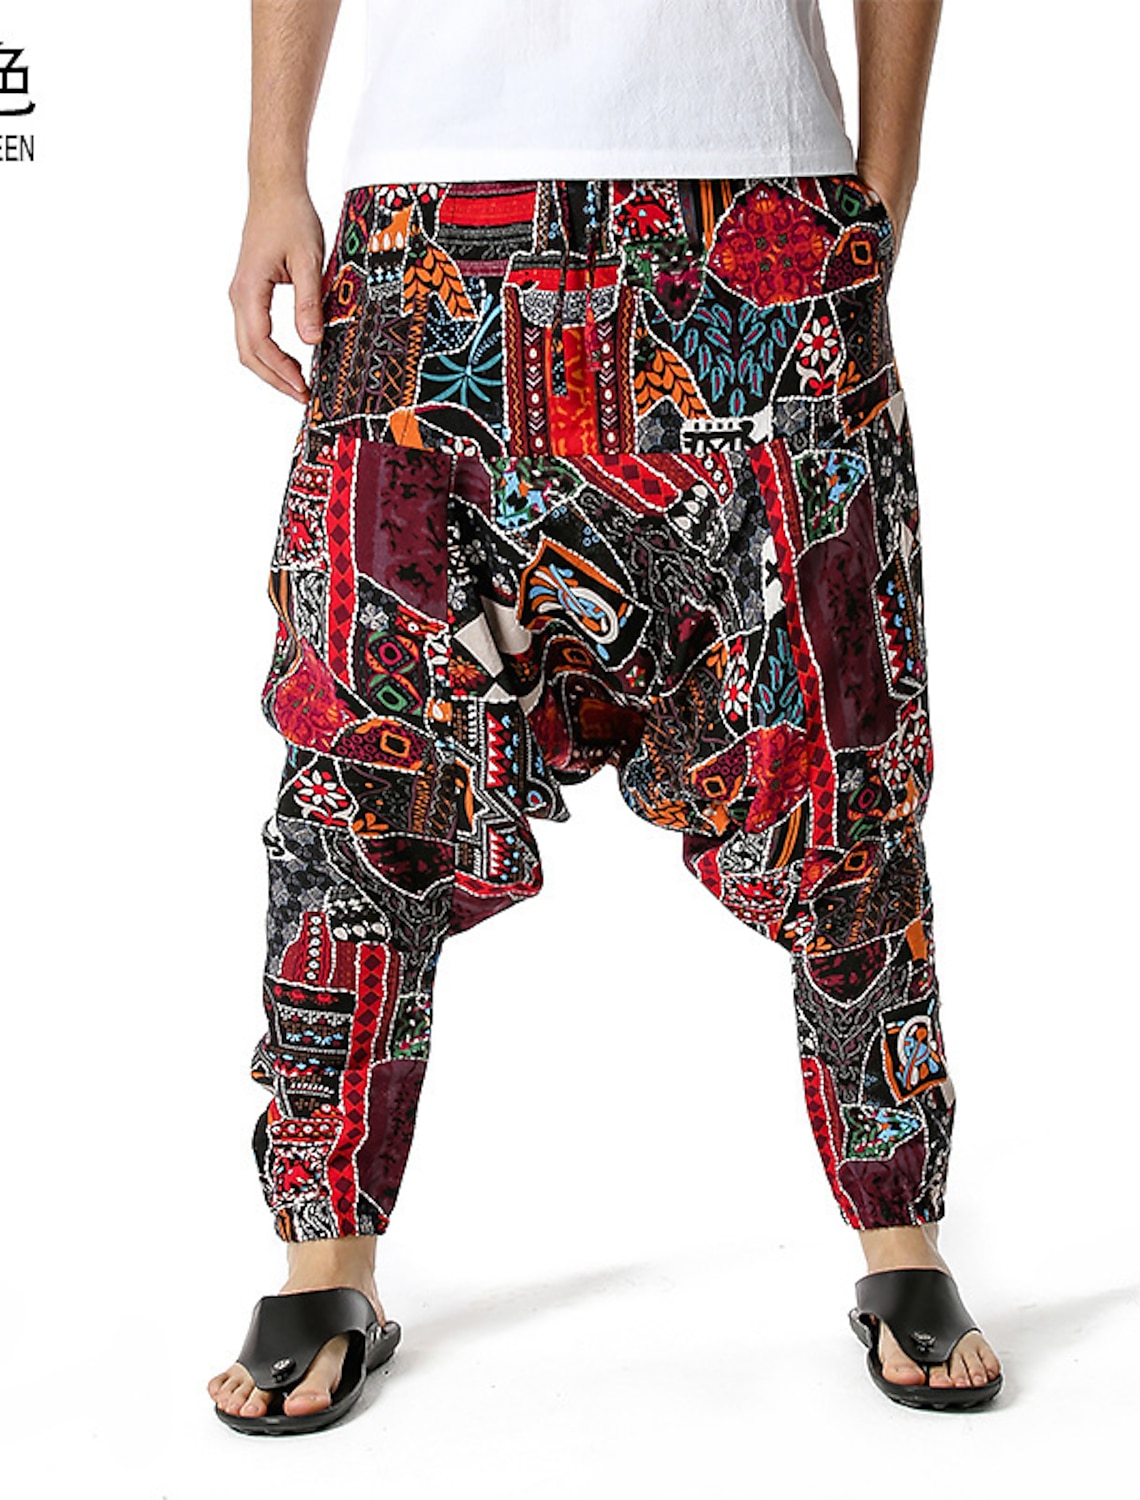 Men Casual Linen Pants Trousers Loose Long Jogging Ethnic Harem Breathable Soft